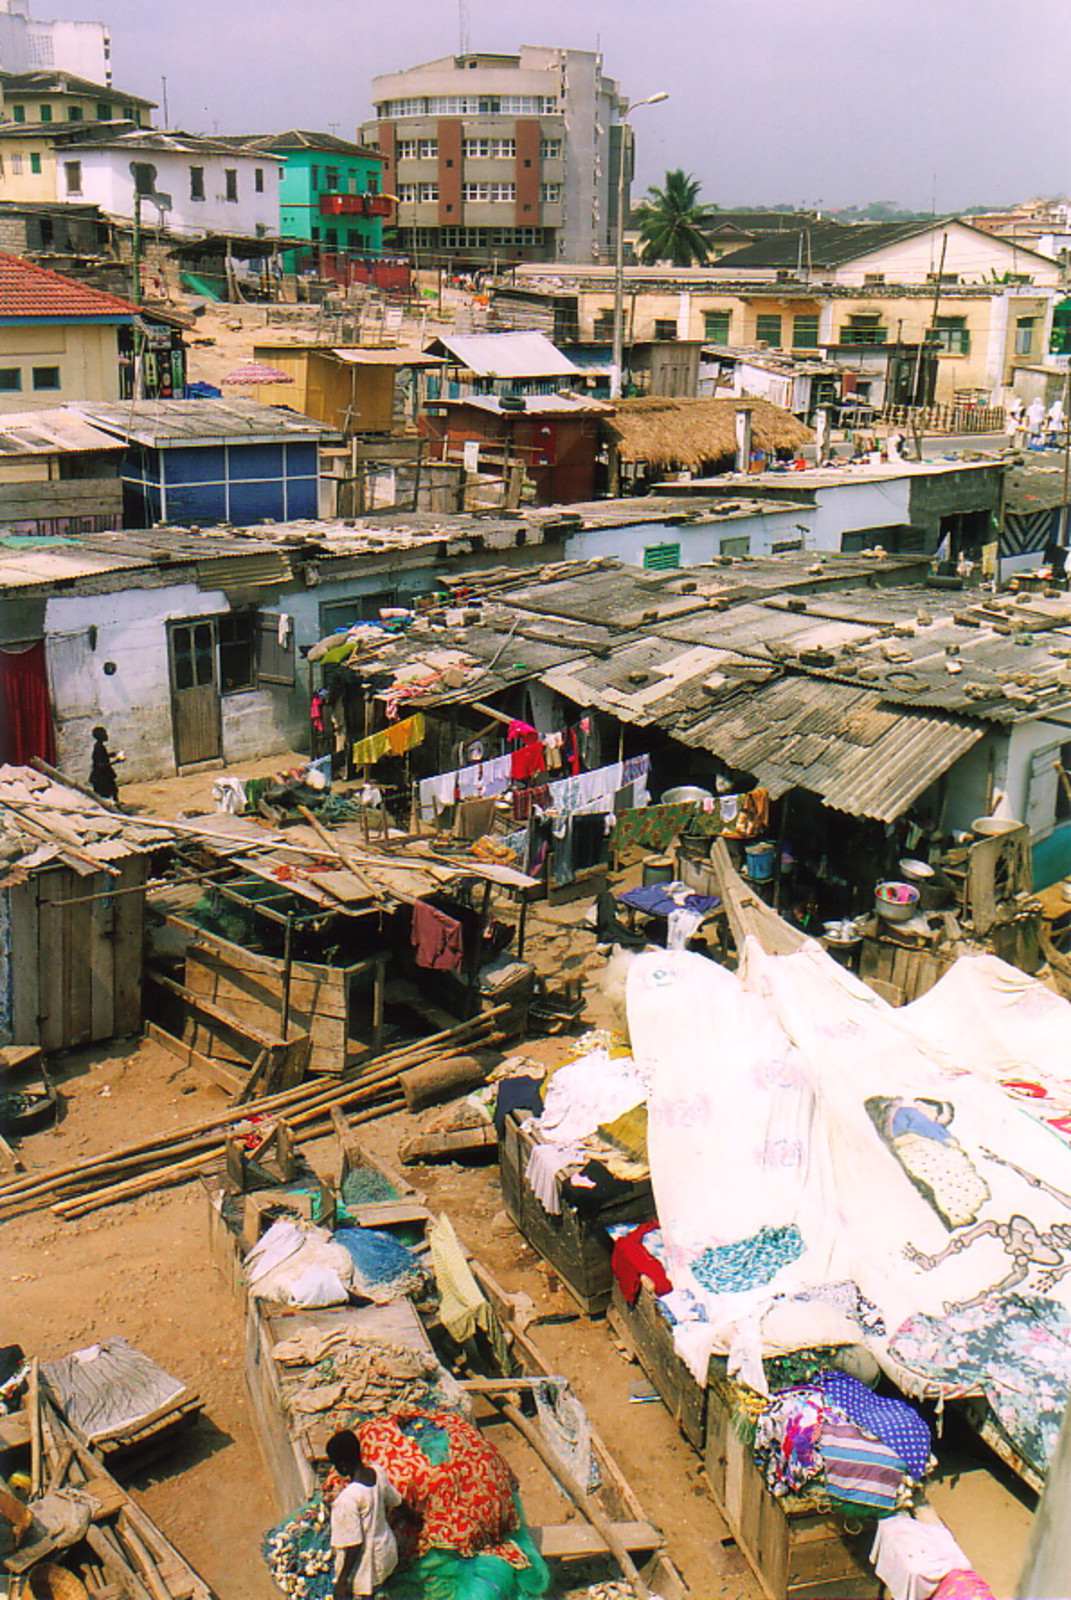 The slums of Cape Coast